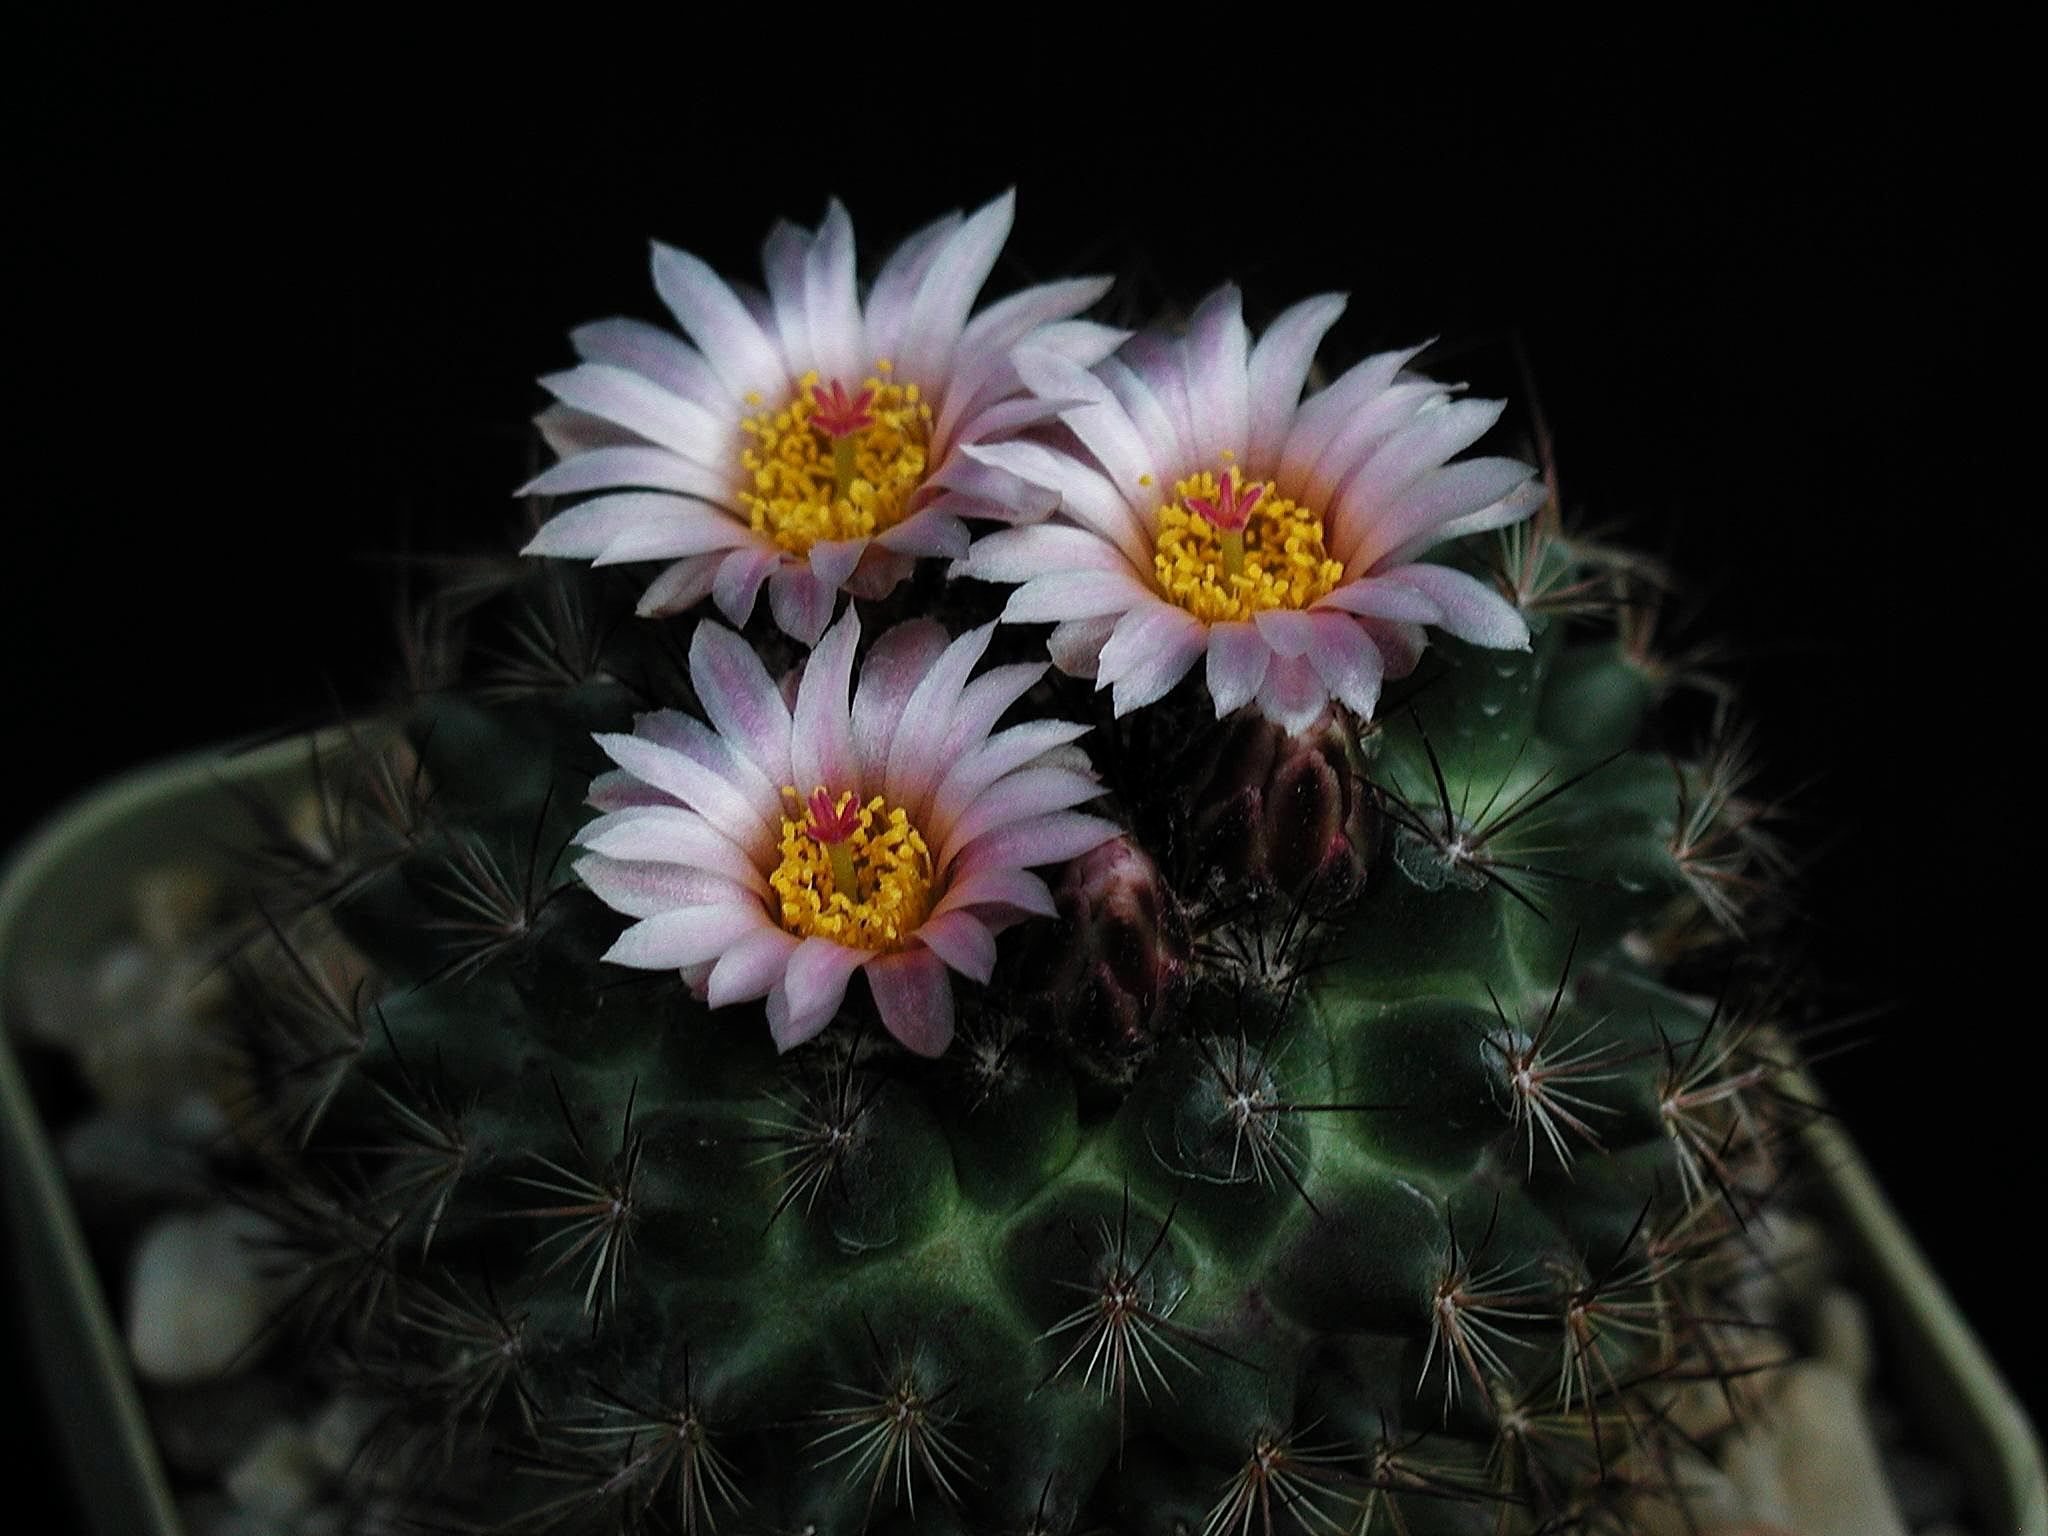 File:Cactus flower in dark room.jpg - Wikimedia Commons